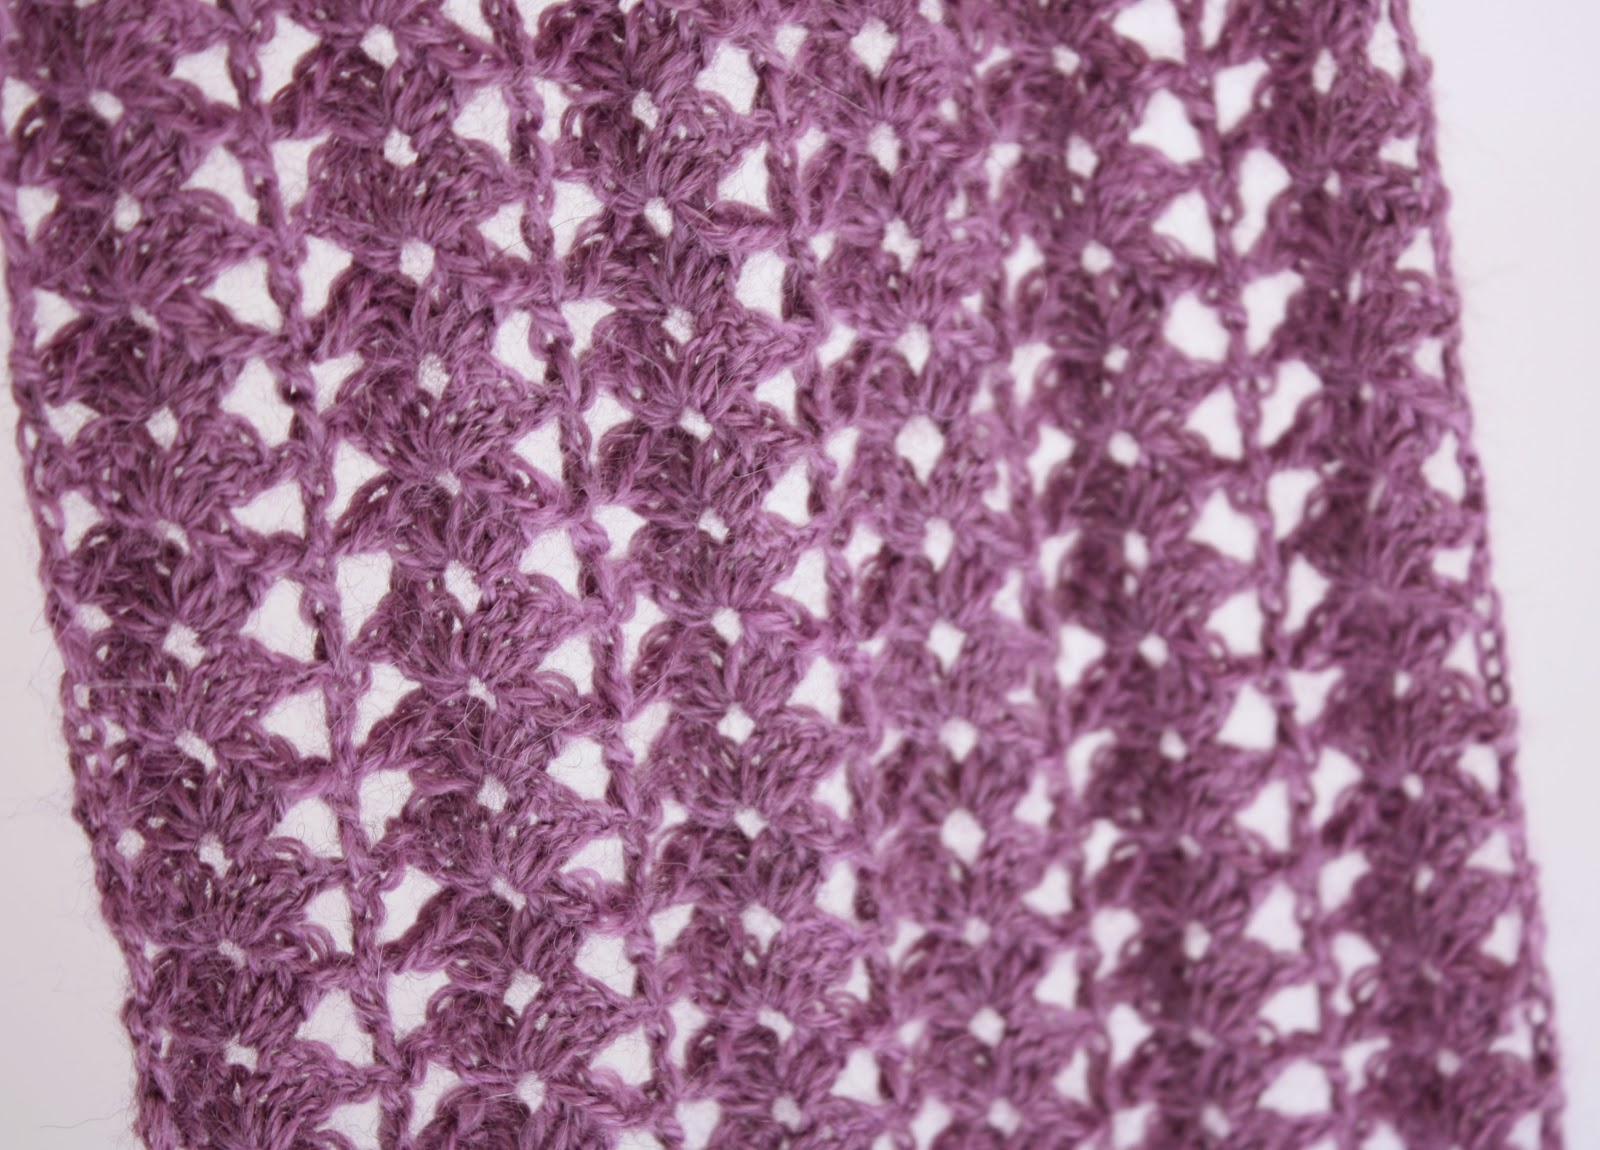 Beginner Crochet Patterns Free Crocheted Scarf Free Pattern A Spoonful Of Sugar